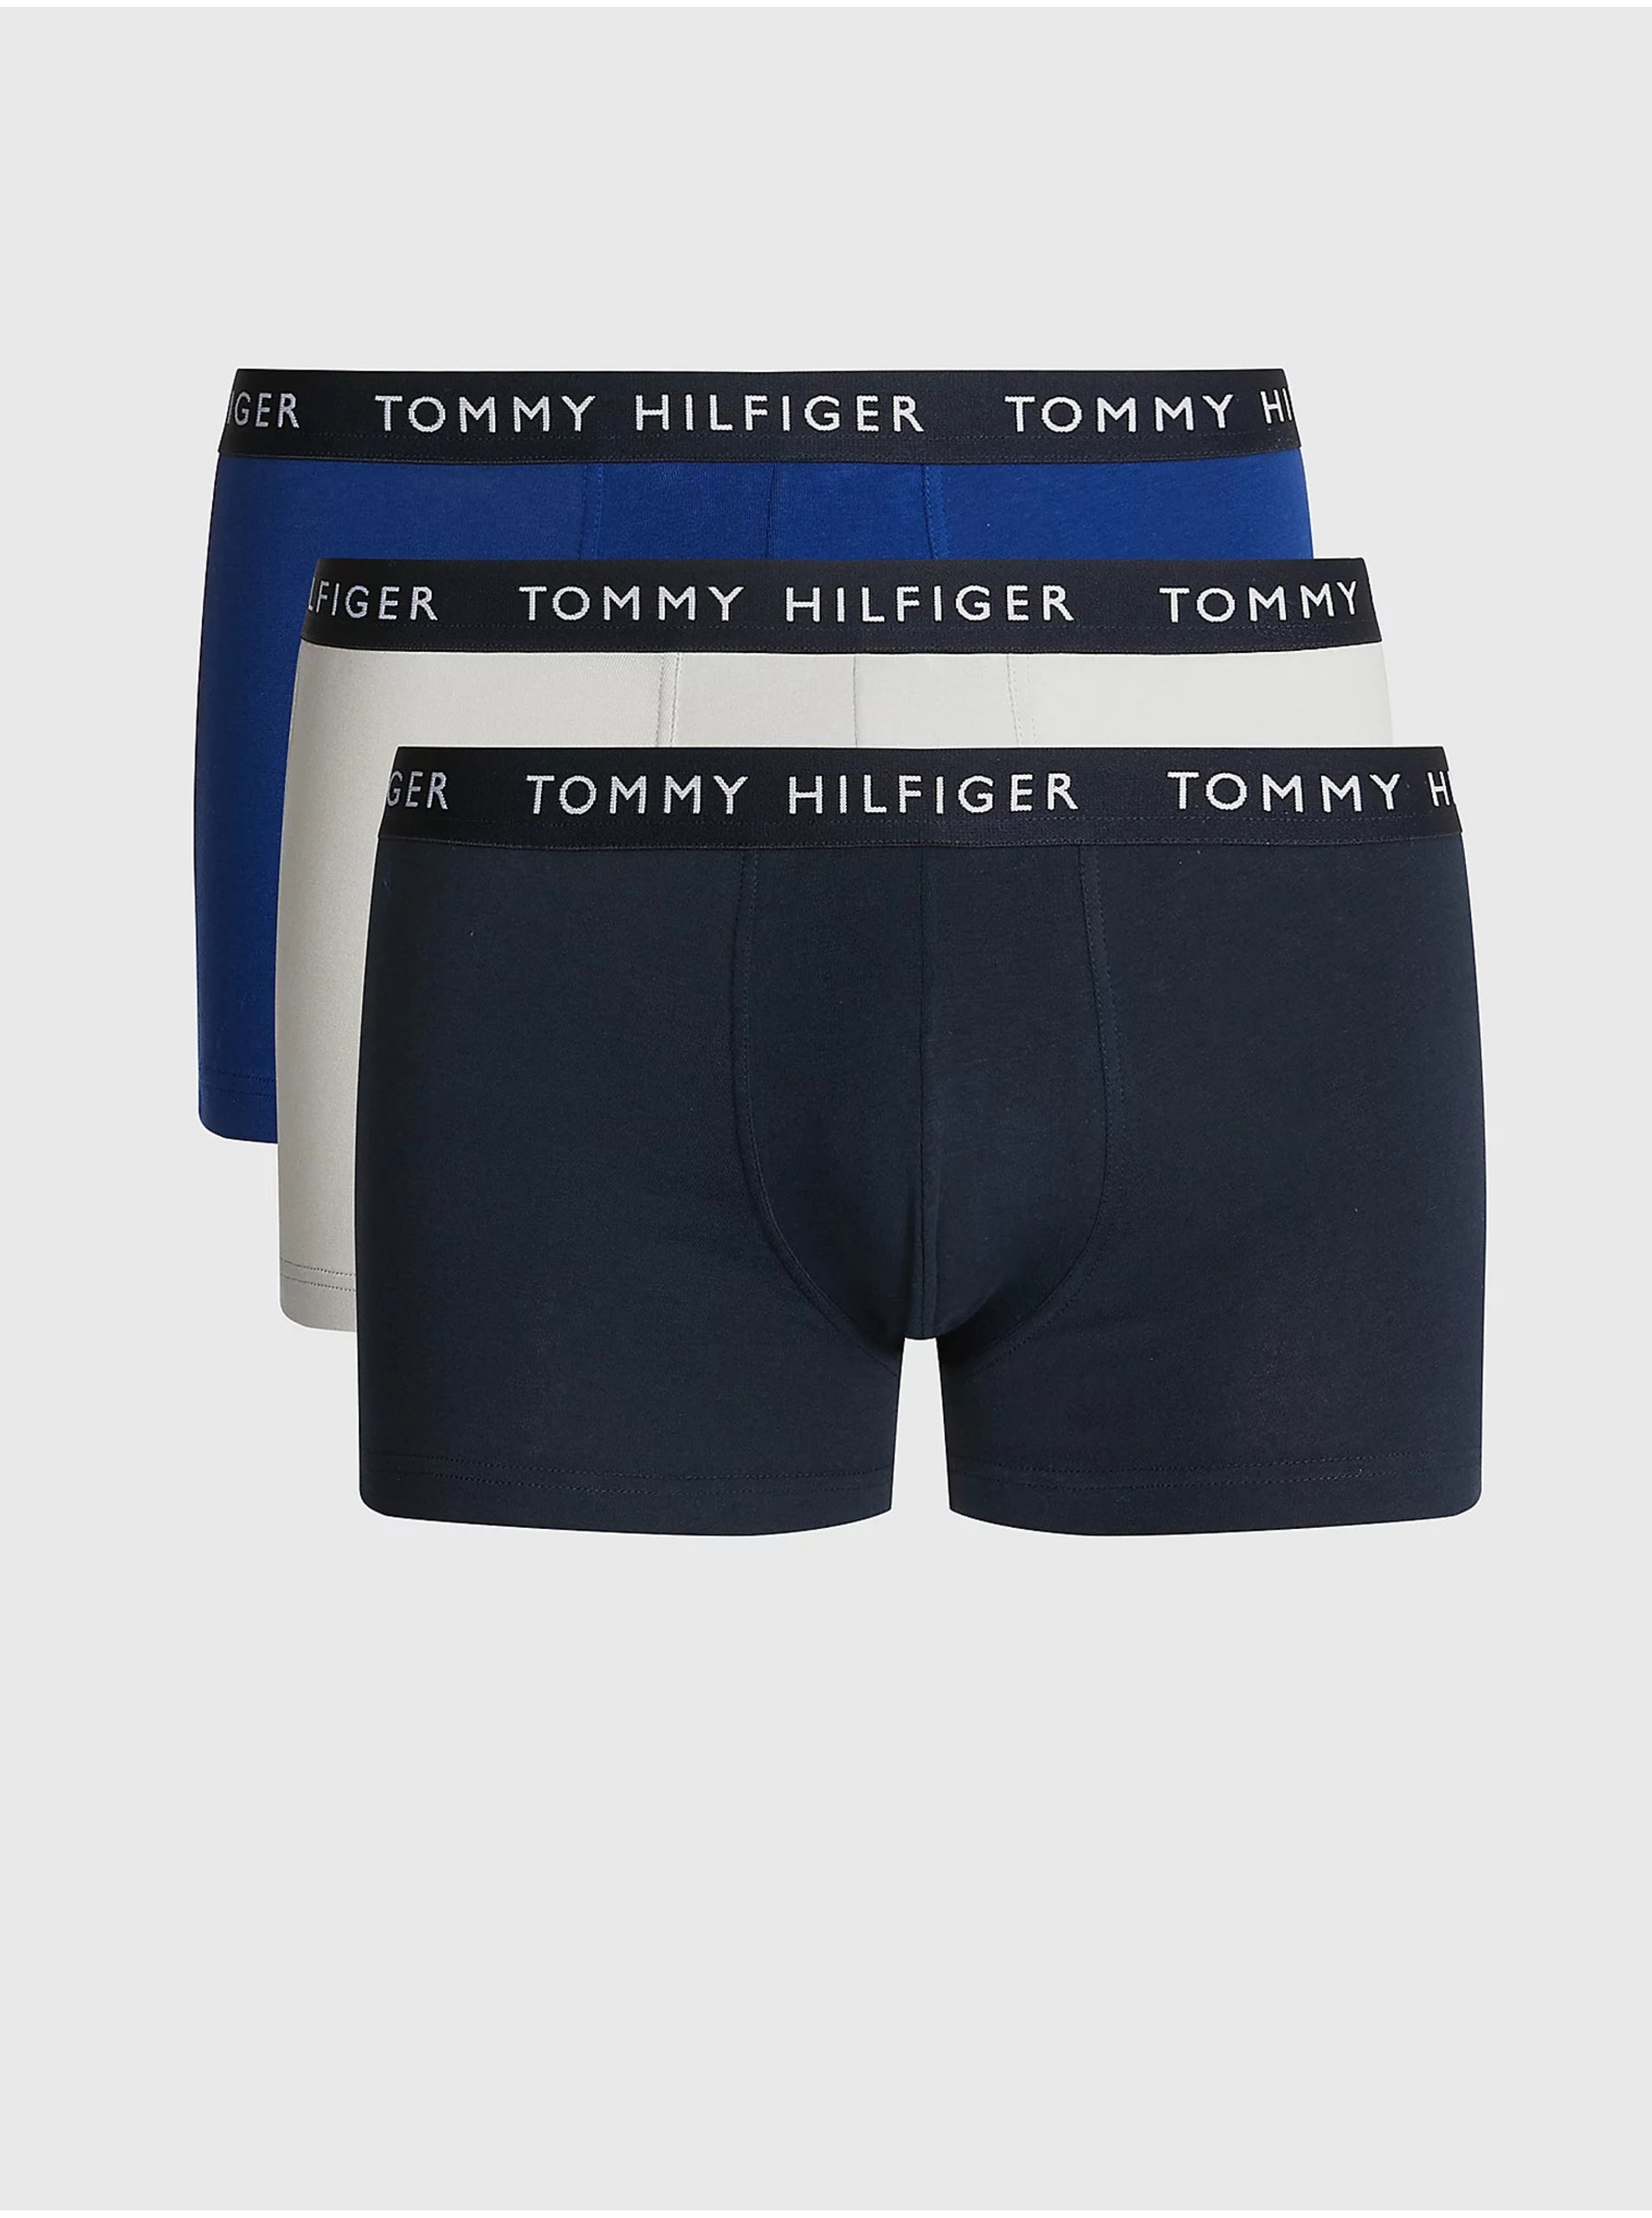 Lacno Boxerky pre mužov Tommy Hilfiger Underwear - tmavomodrá, modrá, biela